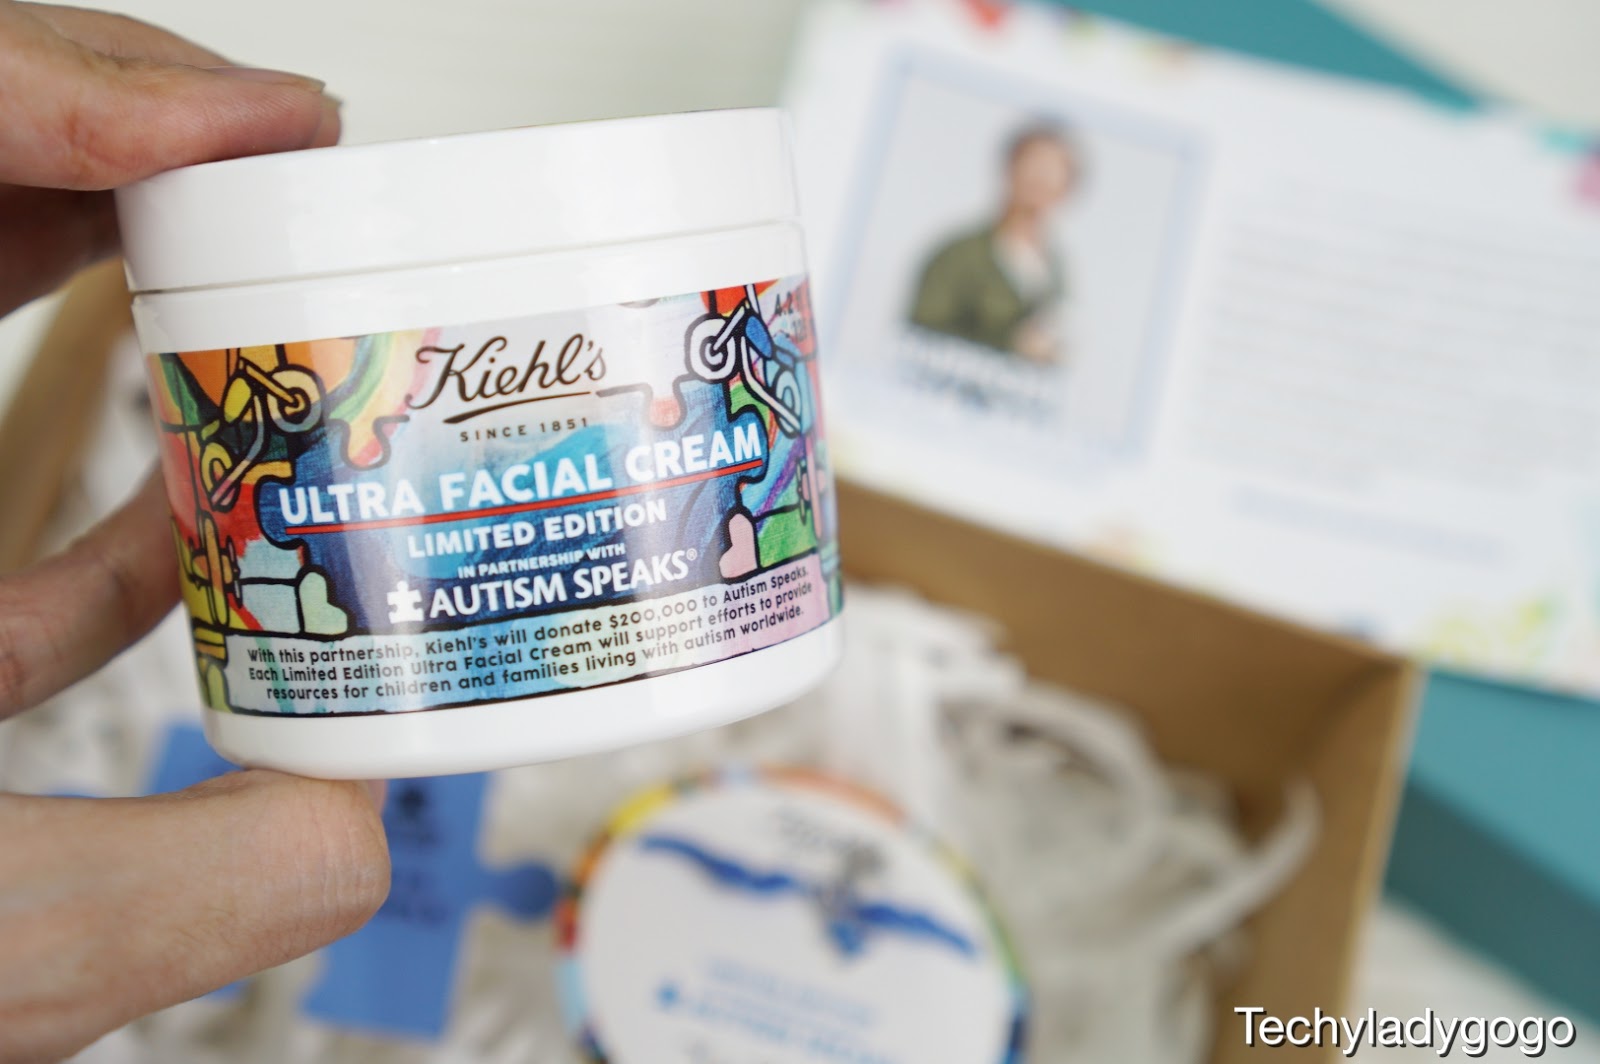 KIEHL’S X AUTISM SPEAKS™ แคมเปญการกุศลระดับโลกประจำปี 2017 ของคีลส์ จัดทำ Kiehl’s x Matthew McConaughey Ultra Facial Cream Limited Edition และคีลส์ ประเทศไทยจะนำรายได้มอบให้กับมูลนิธิออทิสติกไทย